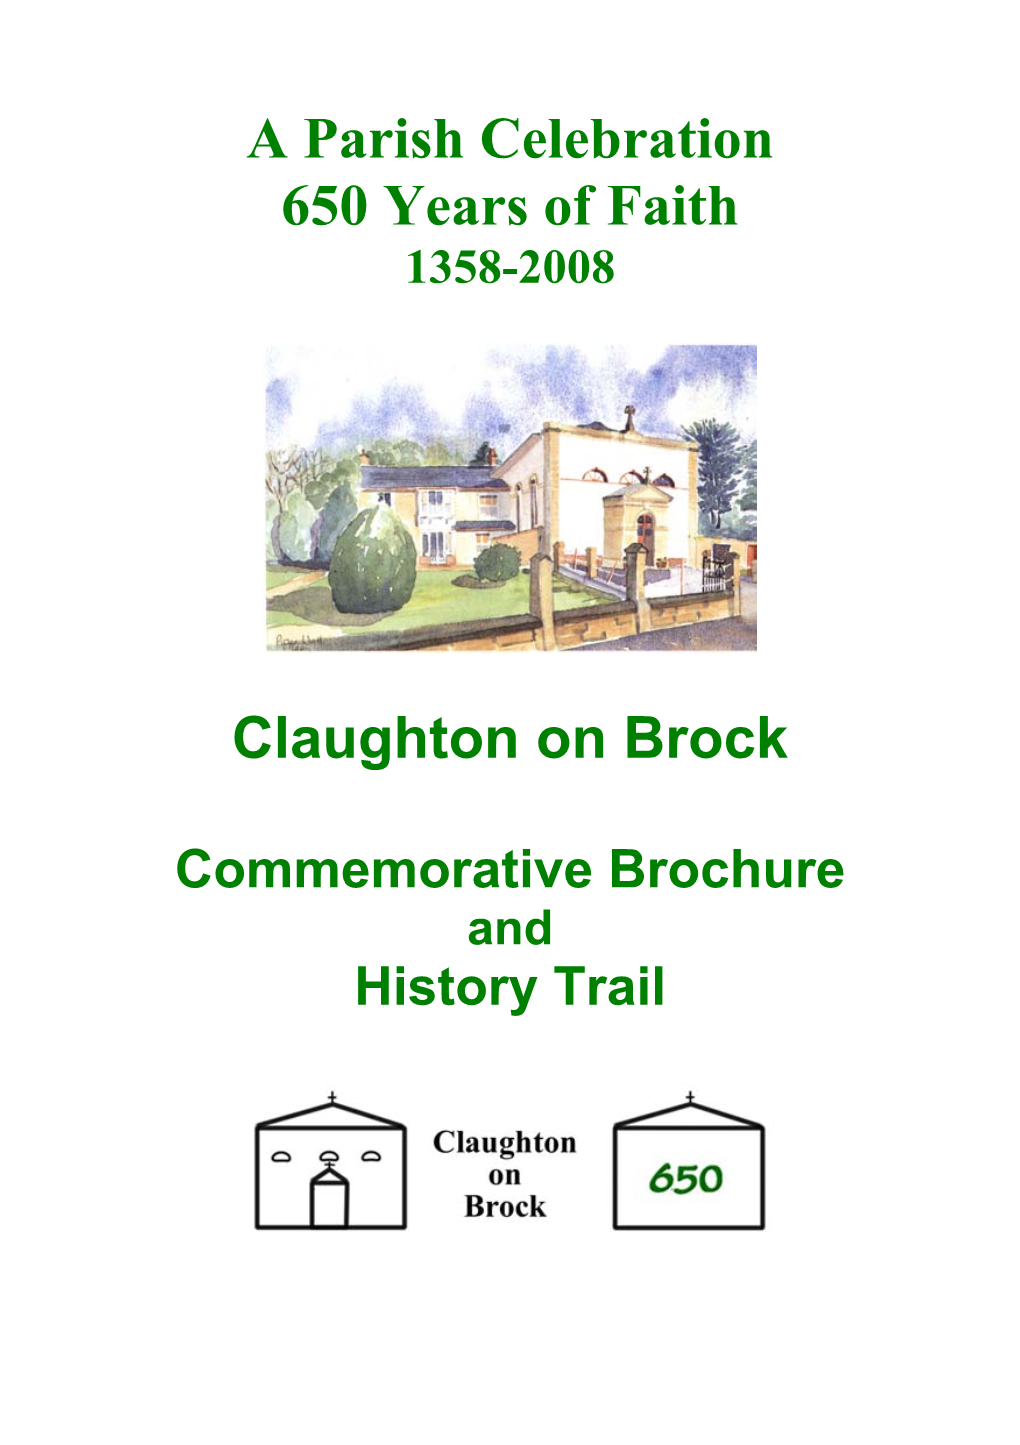 A Parish Celebration 650 Years of Faith Claughton on Brock